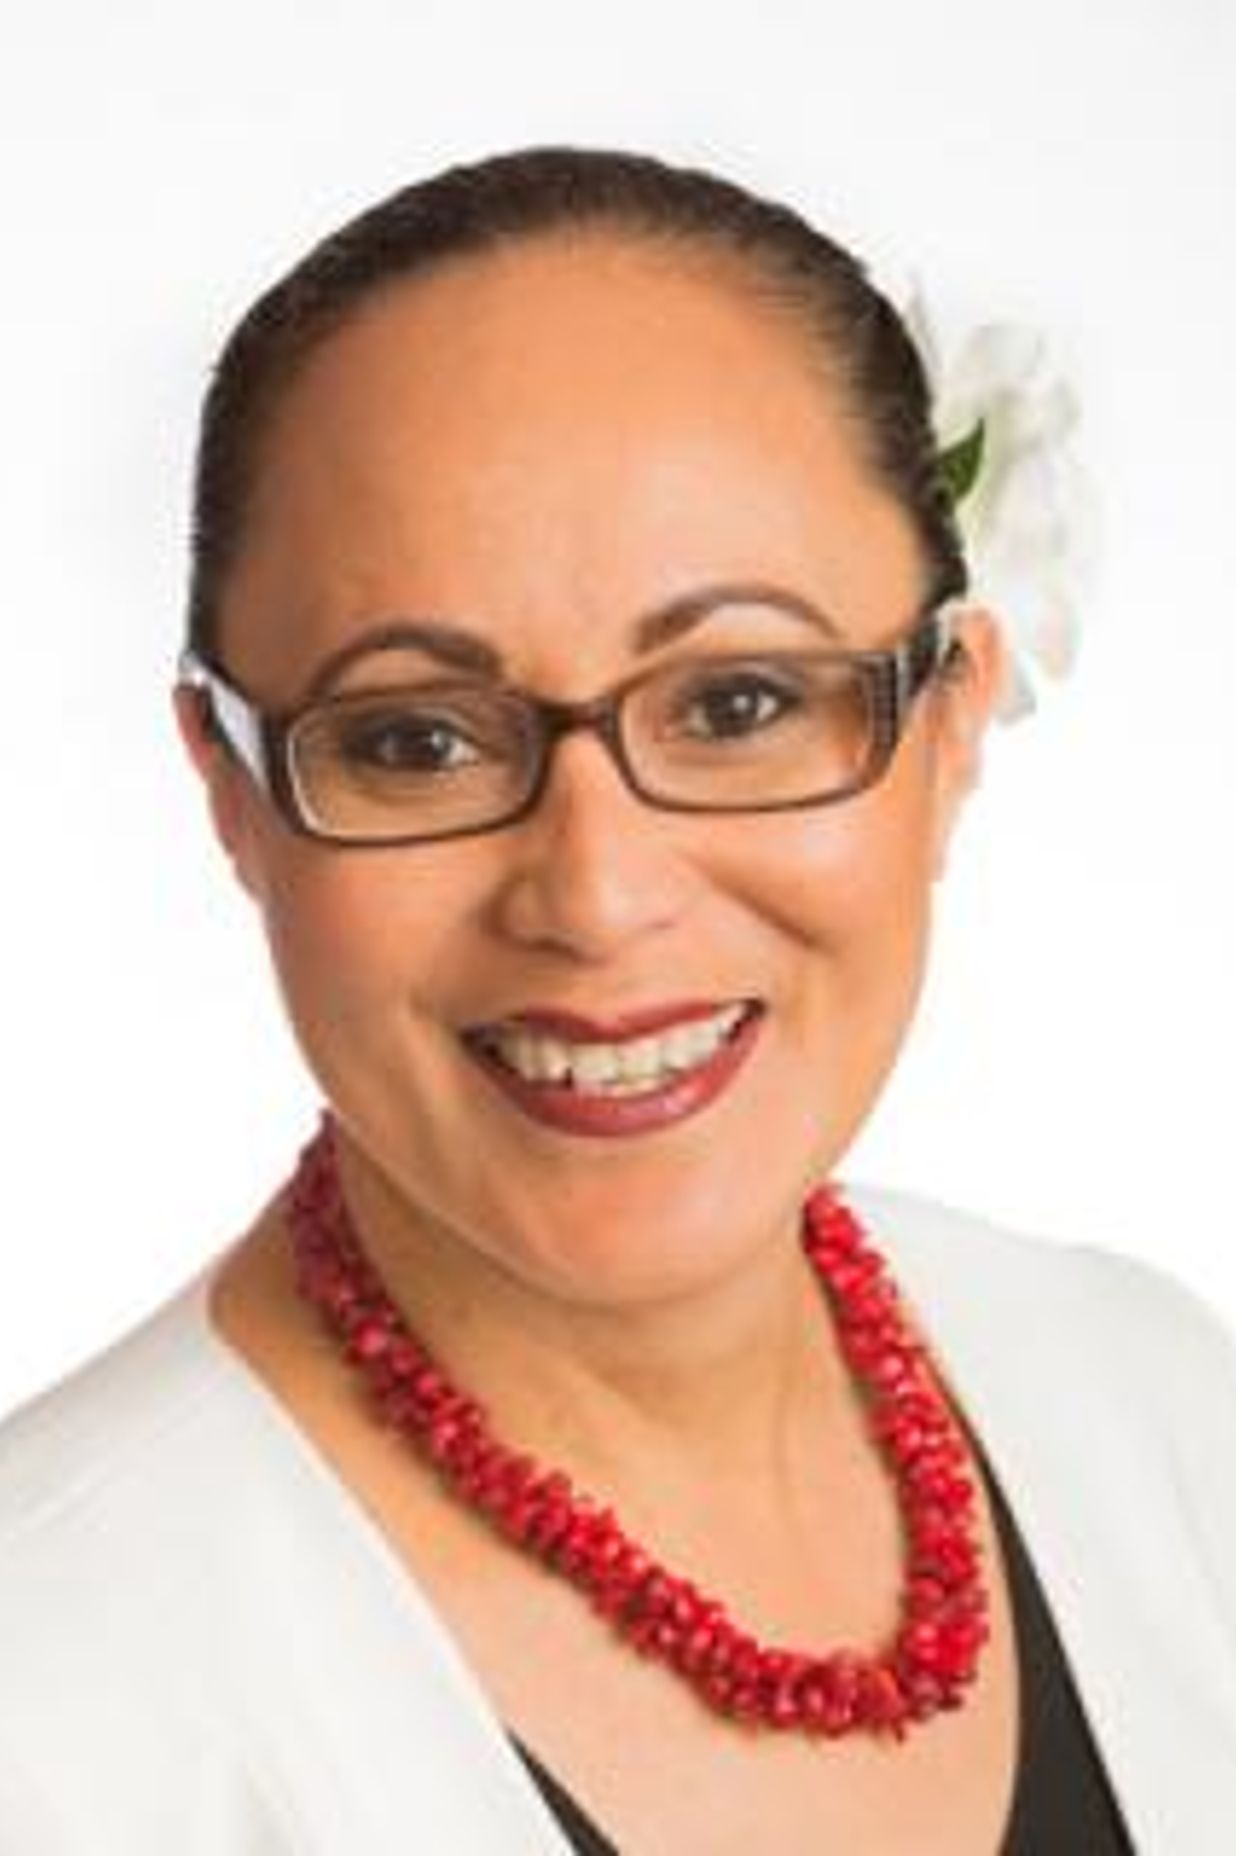 Hon. Salesa is New Zealand’s first Tongan born, Tongan-speaking MP and Minister.